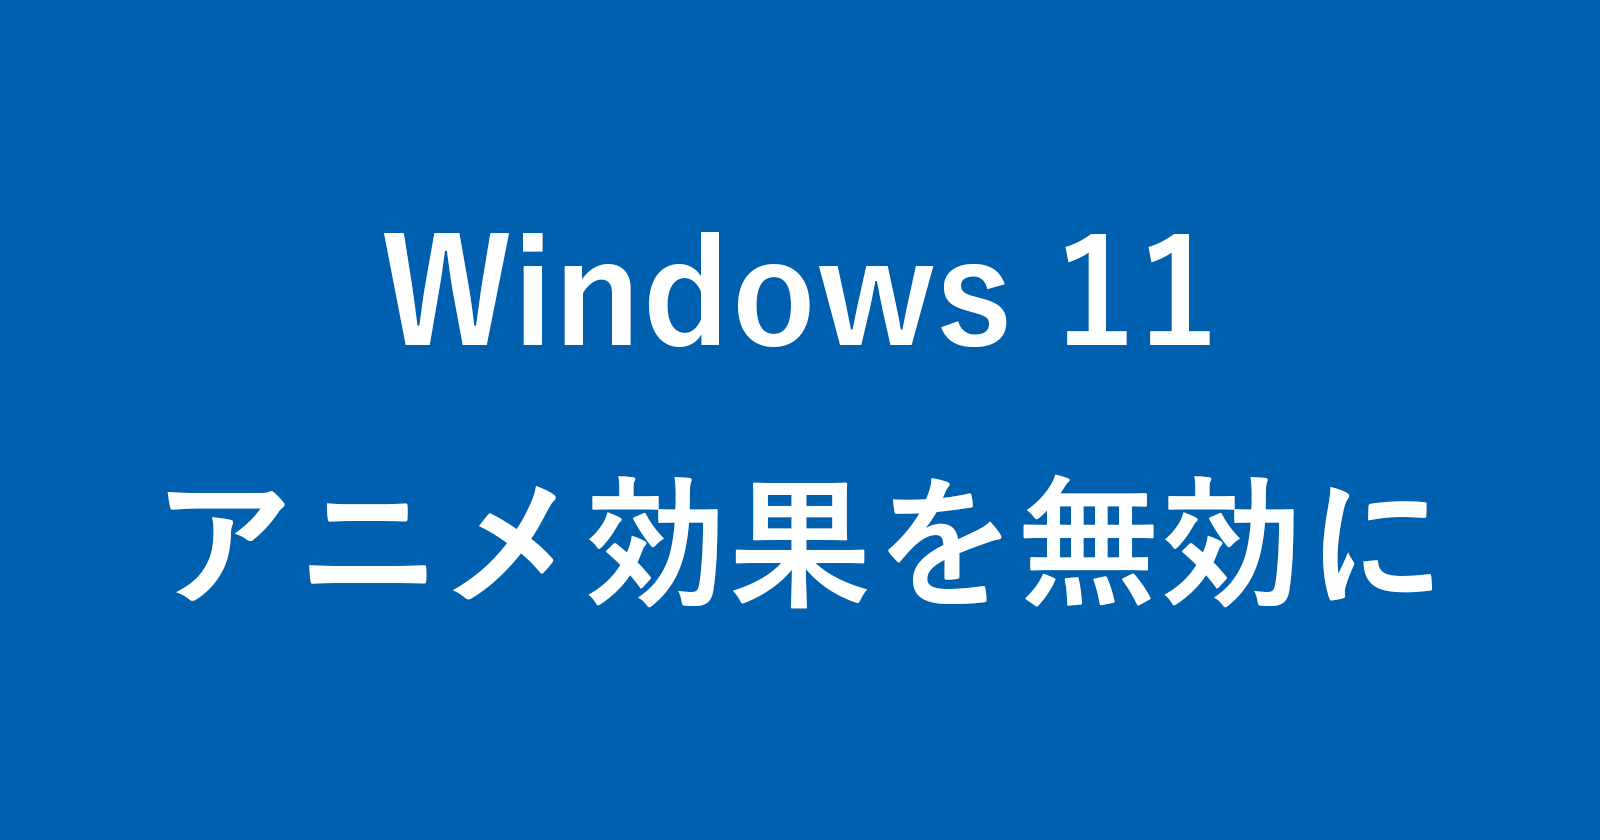 windows 11 turn off animation